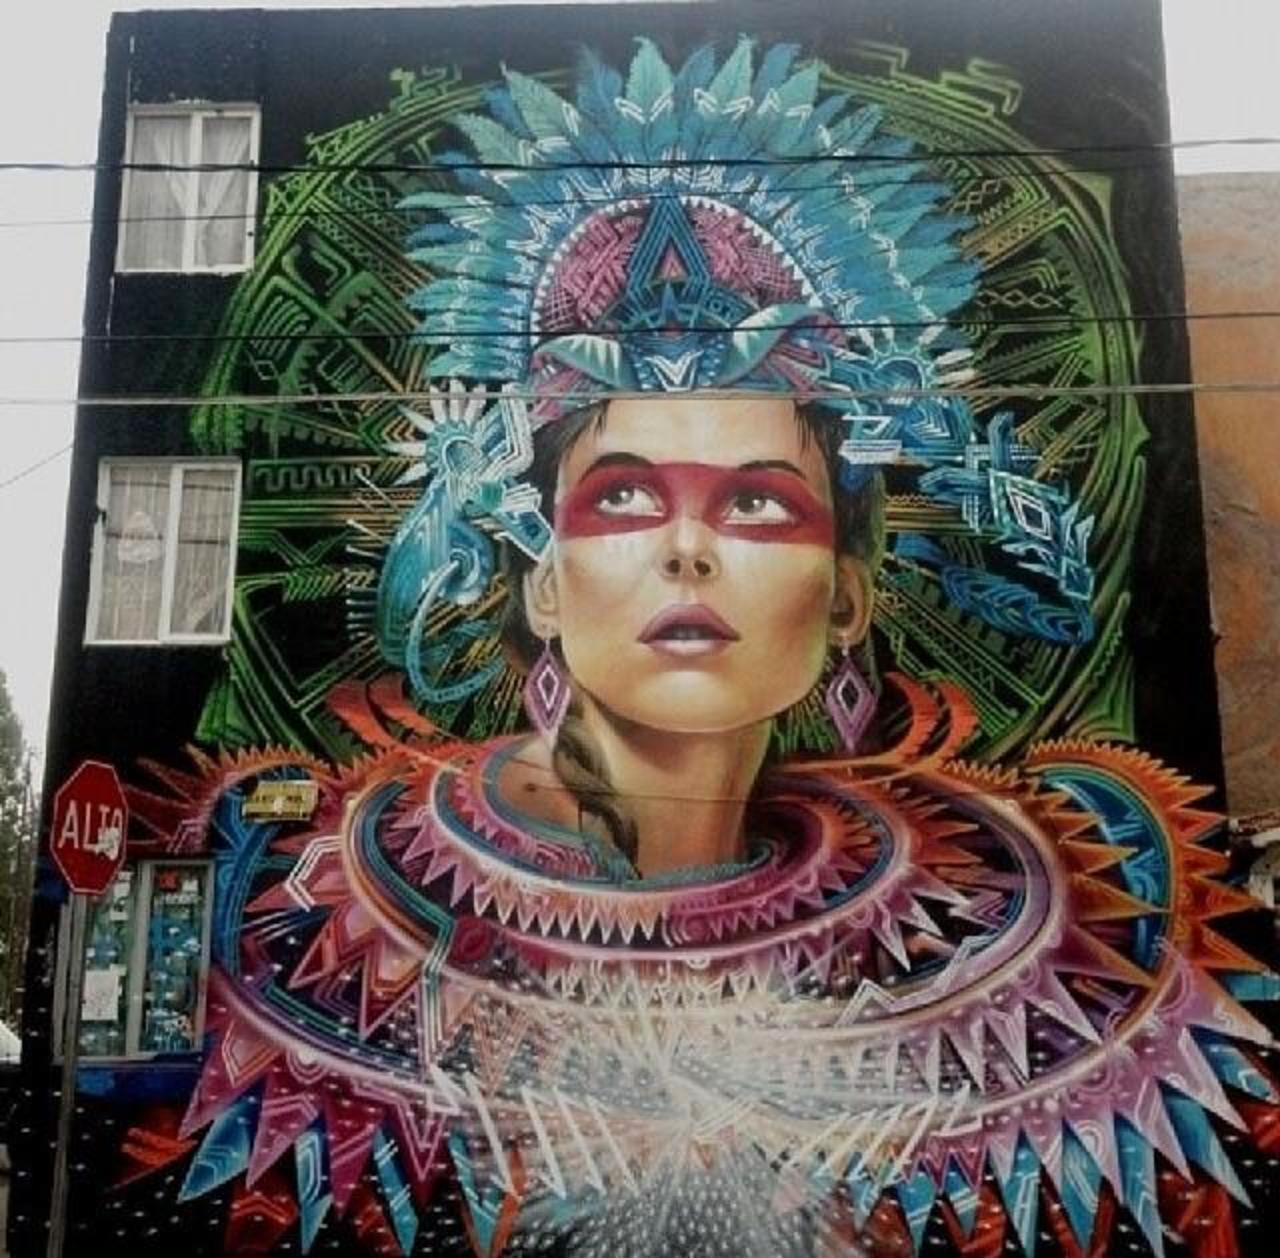 RT @designopinion: Artist 'Espectral Cauac Azul' glorious large scale Street Art in Mexico #art #graffiti #mural #streetart http://t.co/l2jO8MxoyX